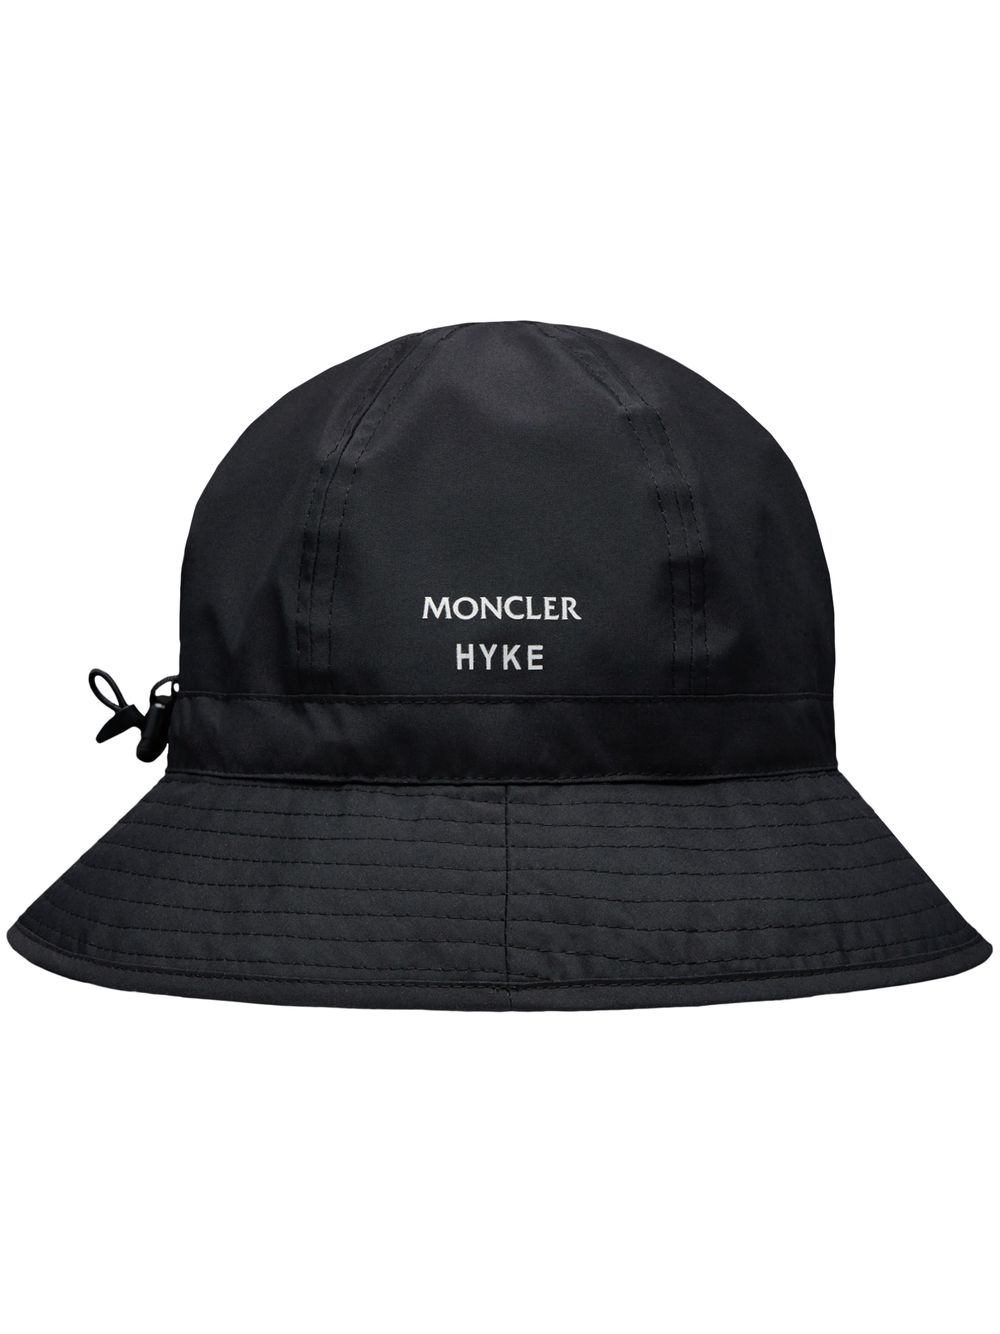 4 Moncler Hyke bucket hat | Moncler Genius | Eraldo.com